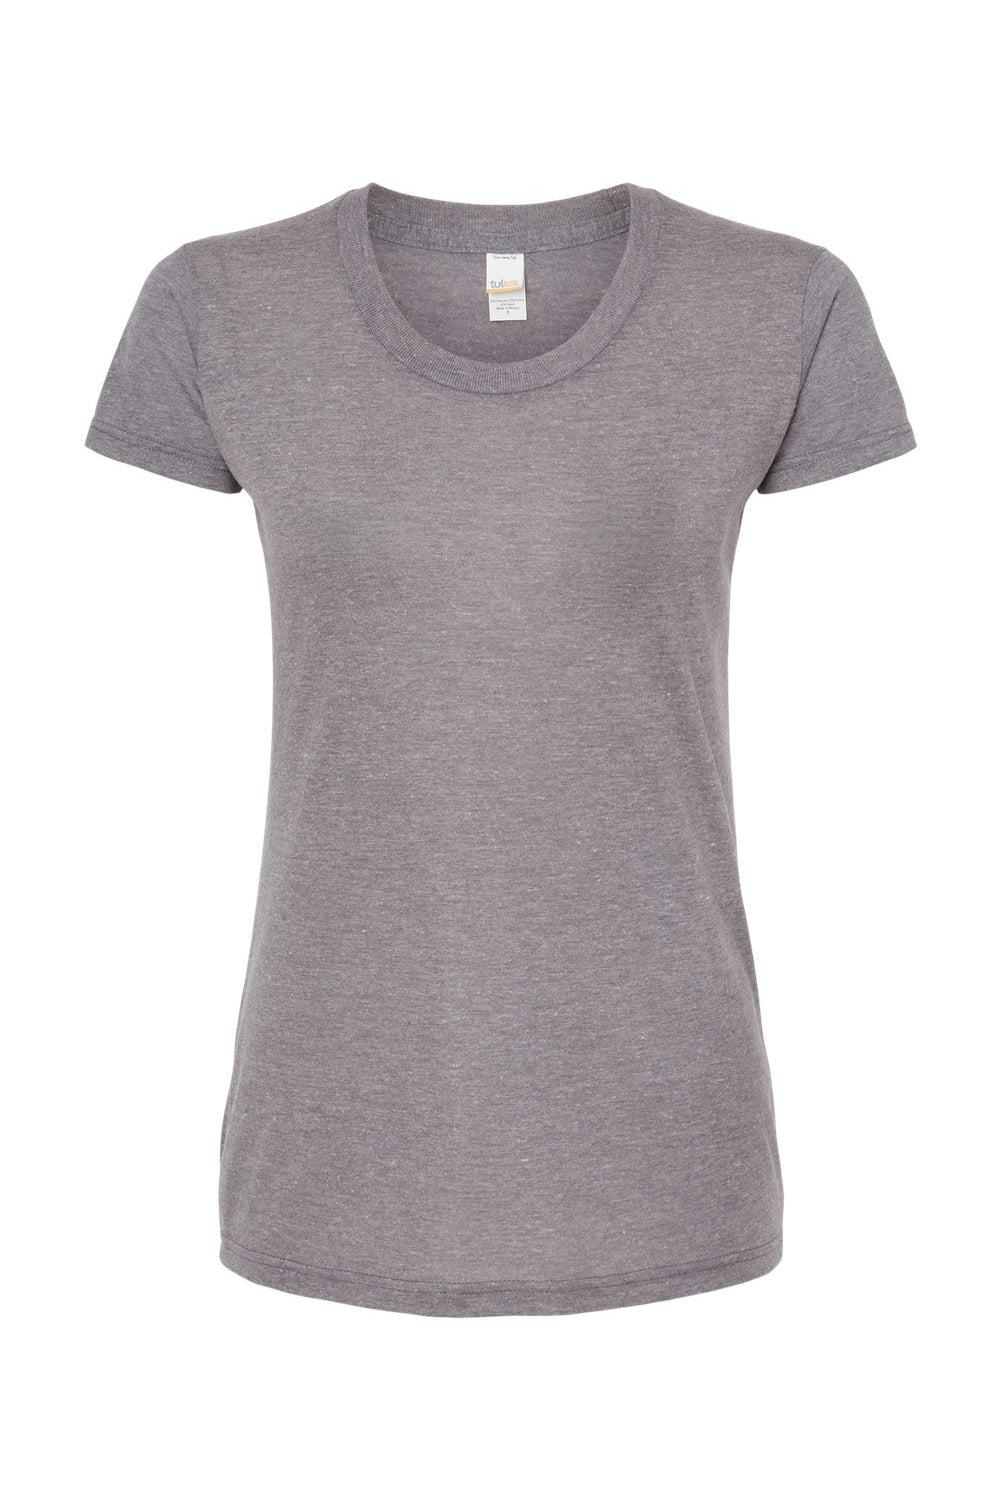 Tultex 253 Womens Short Sleeve Crewneck T-Shirt Heather Grey Flat Front